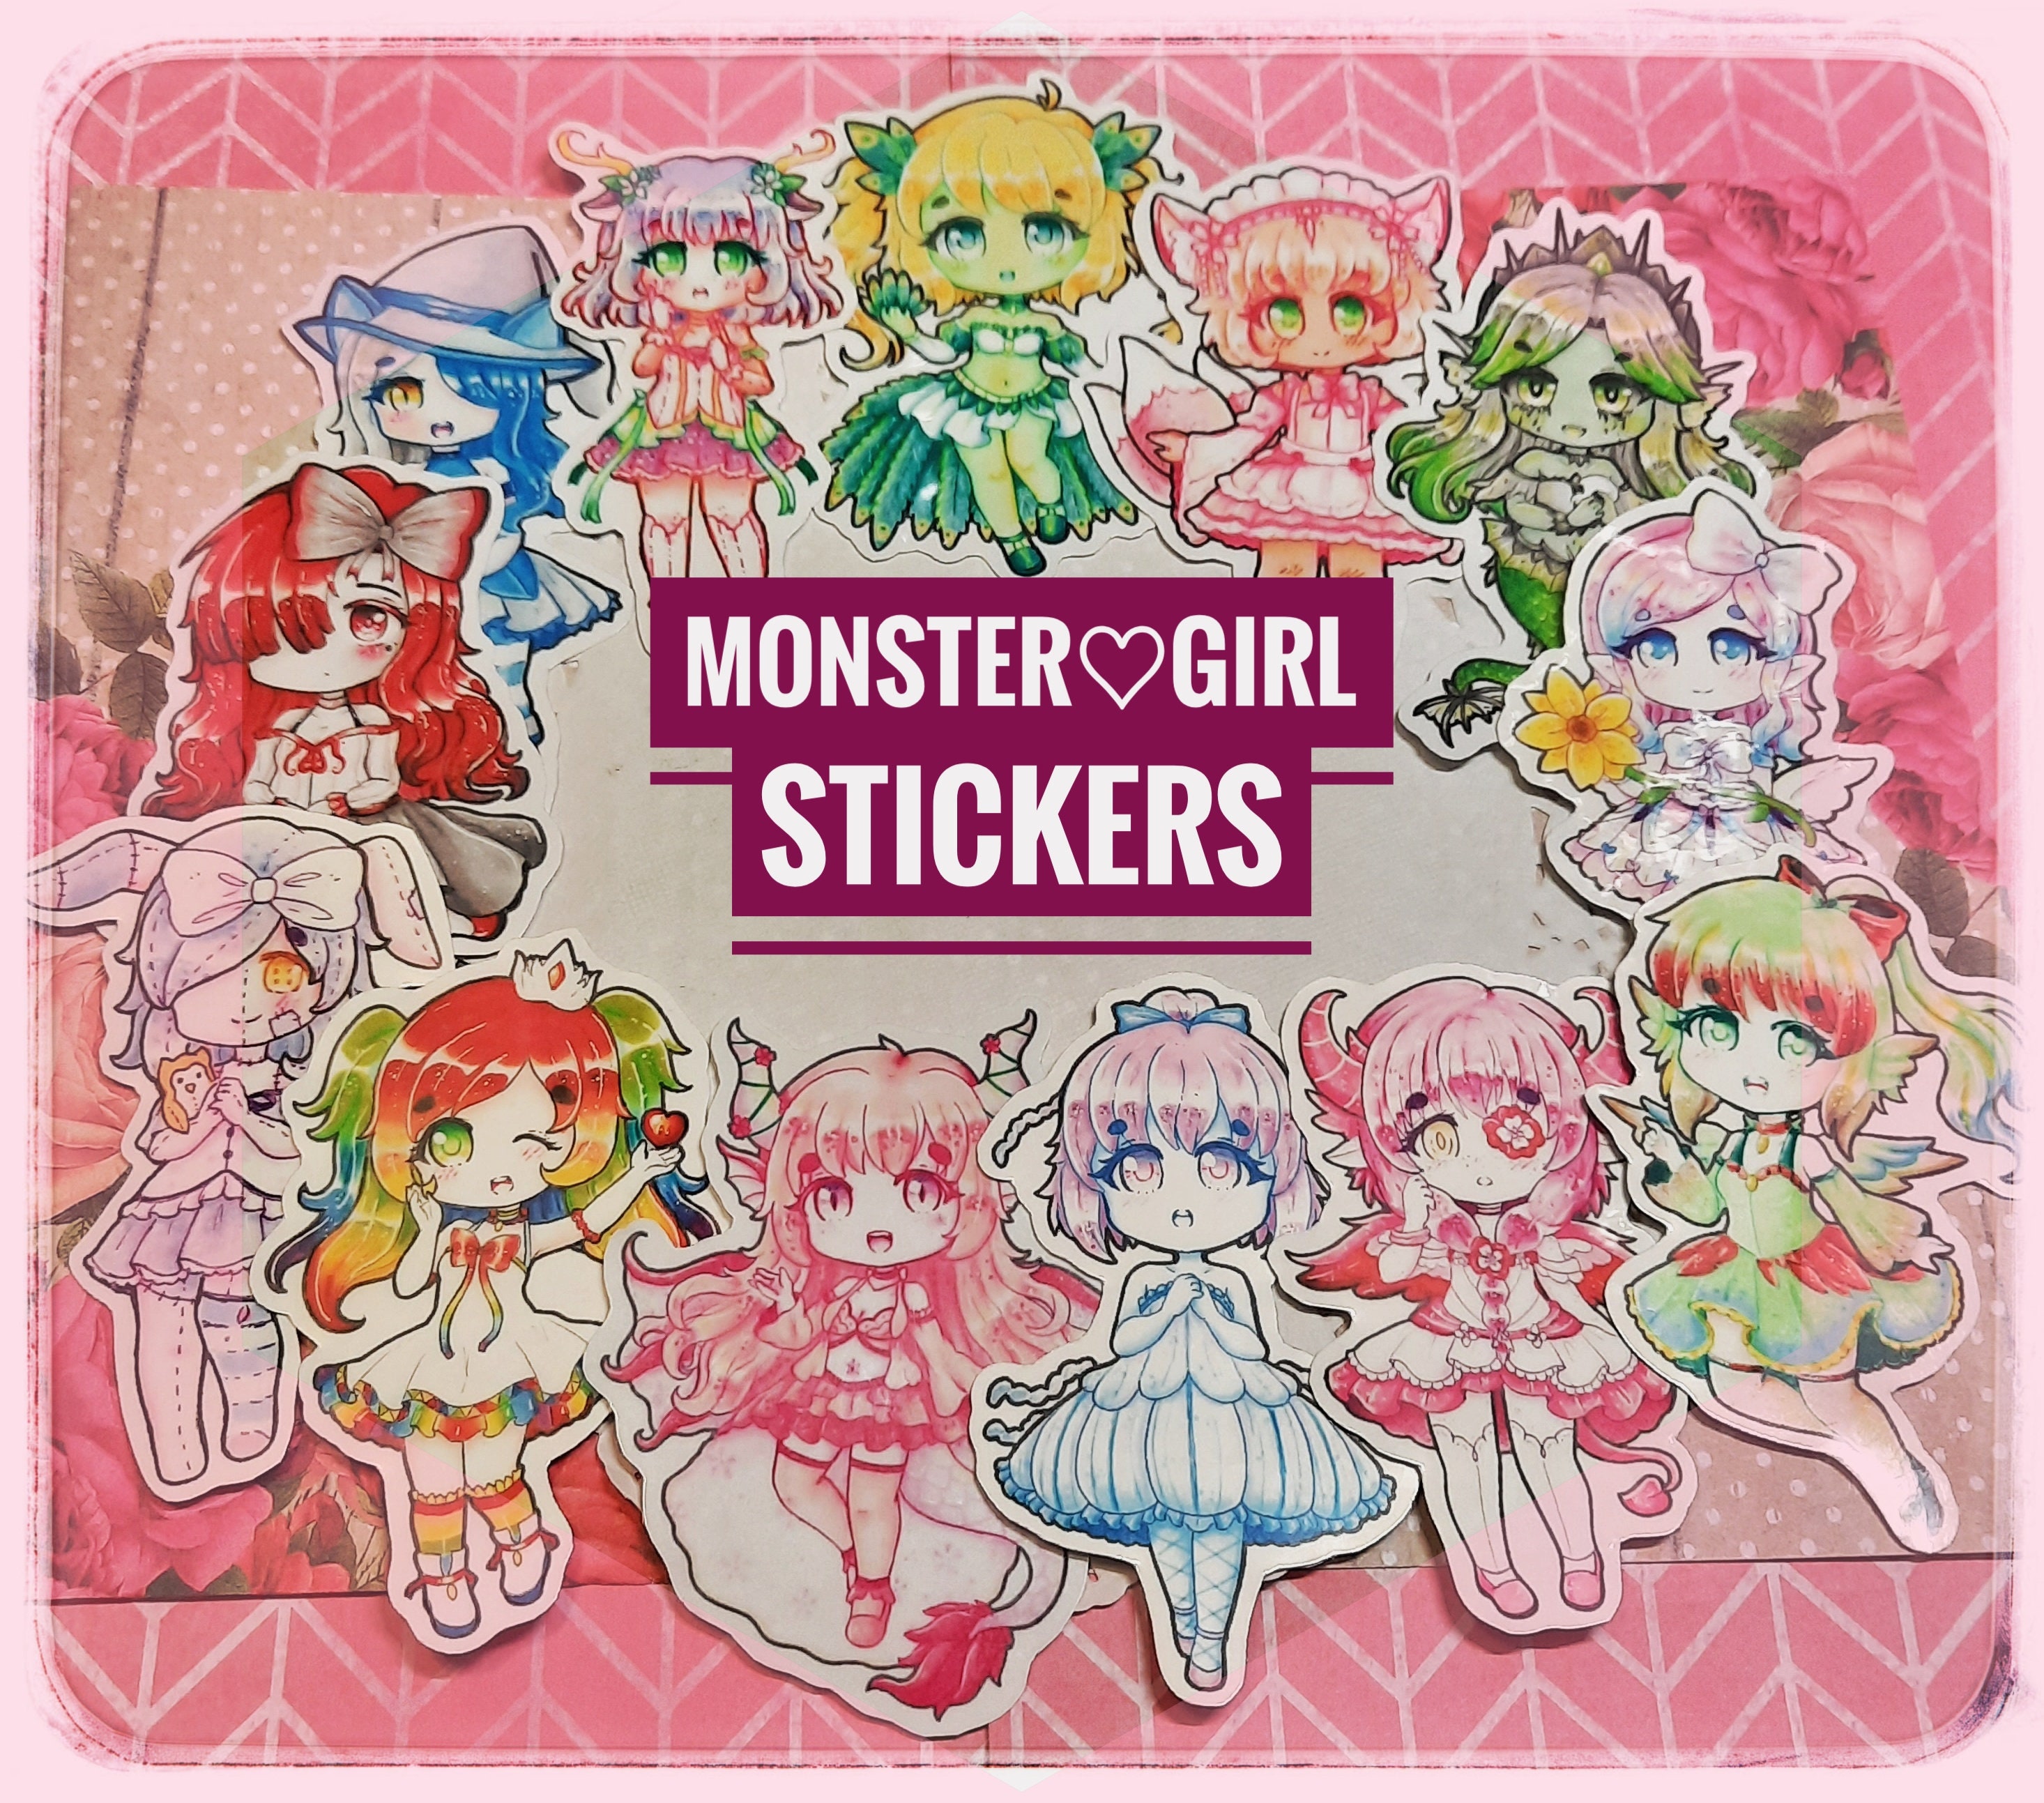 Hatsune Miku Holographic and Vinyl Stickers-kawaii Chibi Anime Girls,  Cinderella, Rapunzel, Snow White, Red Riding Hood, Sakura, and More -   Israel